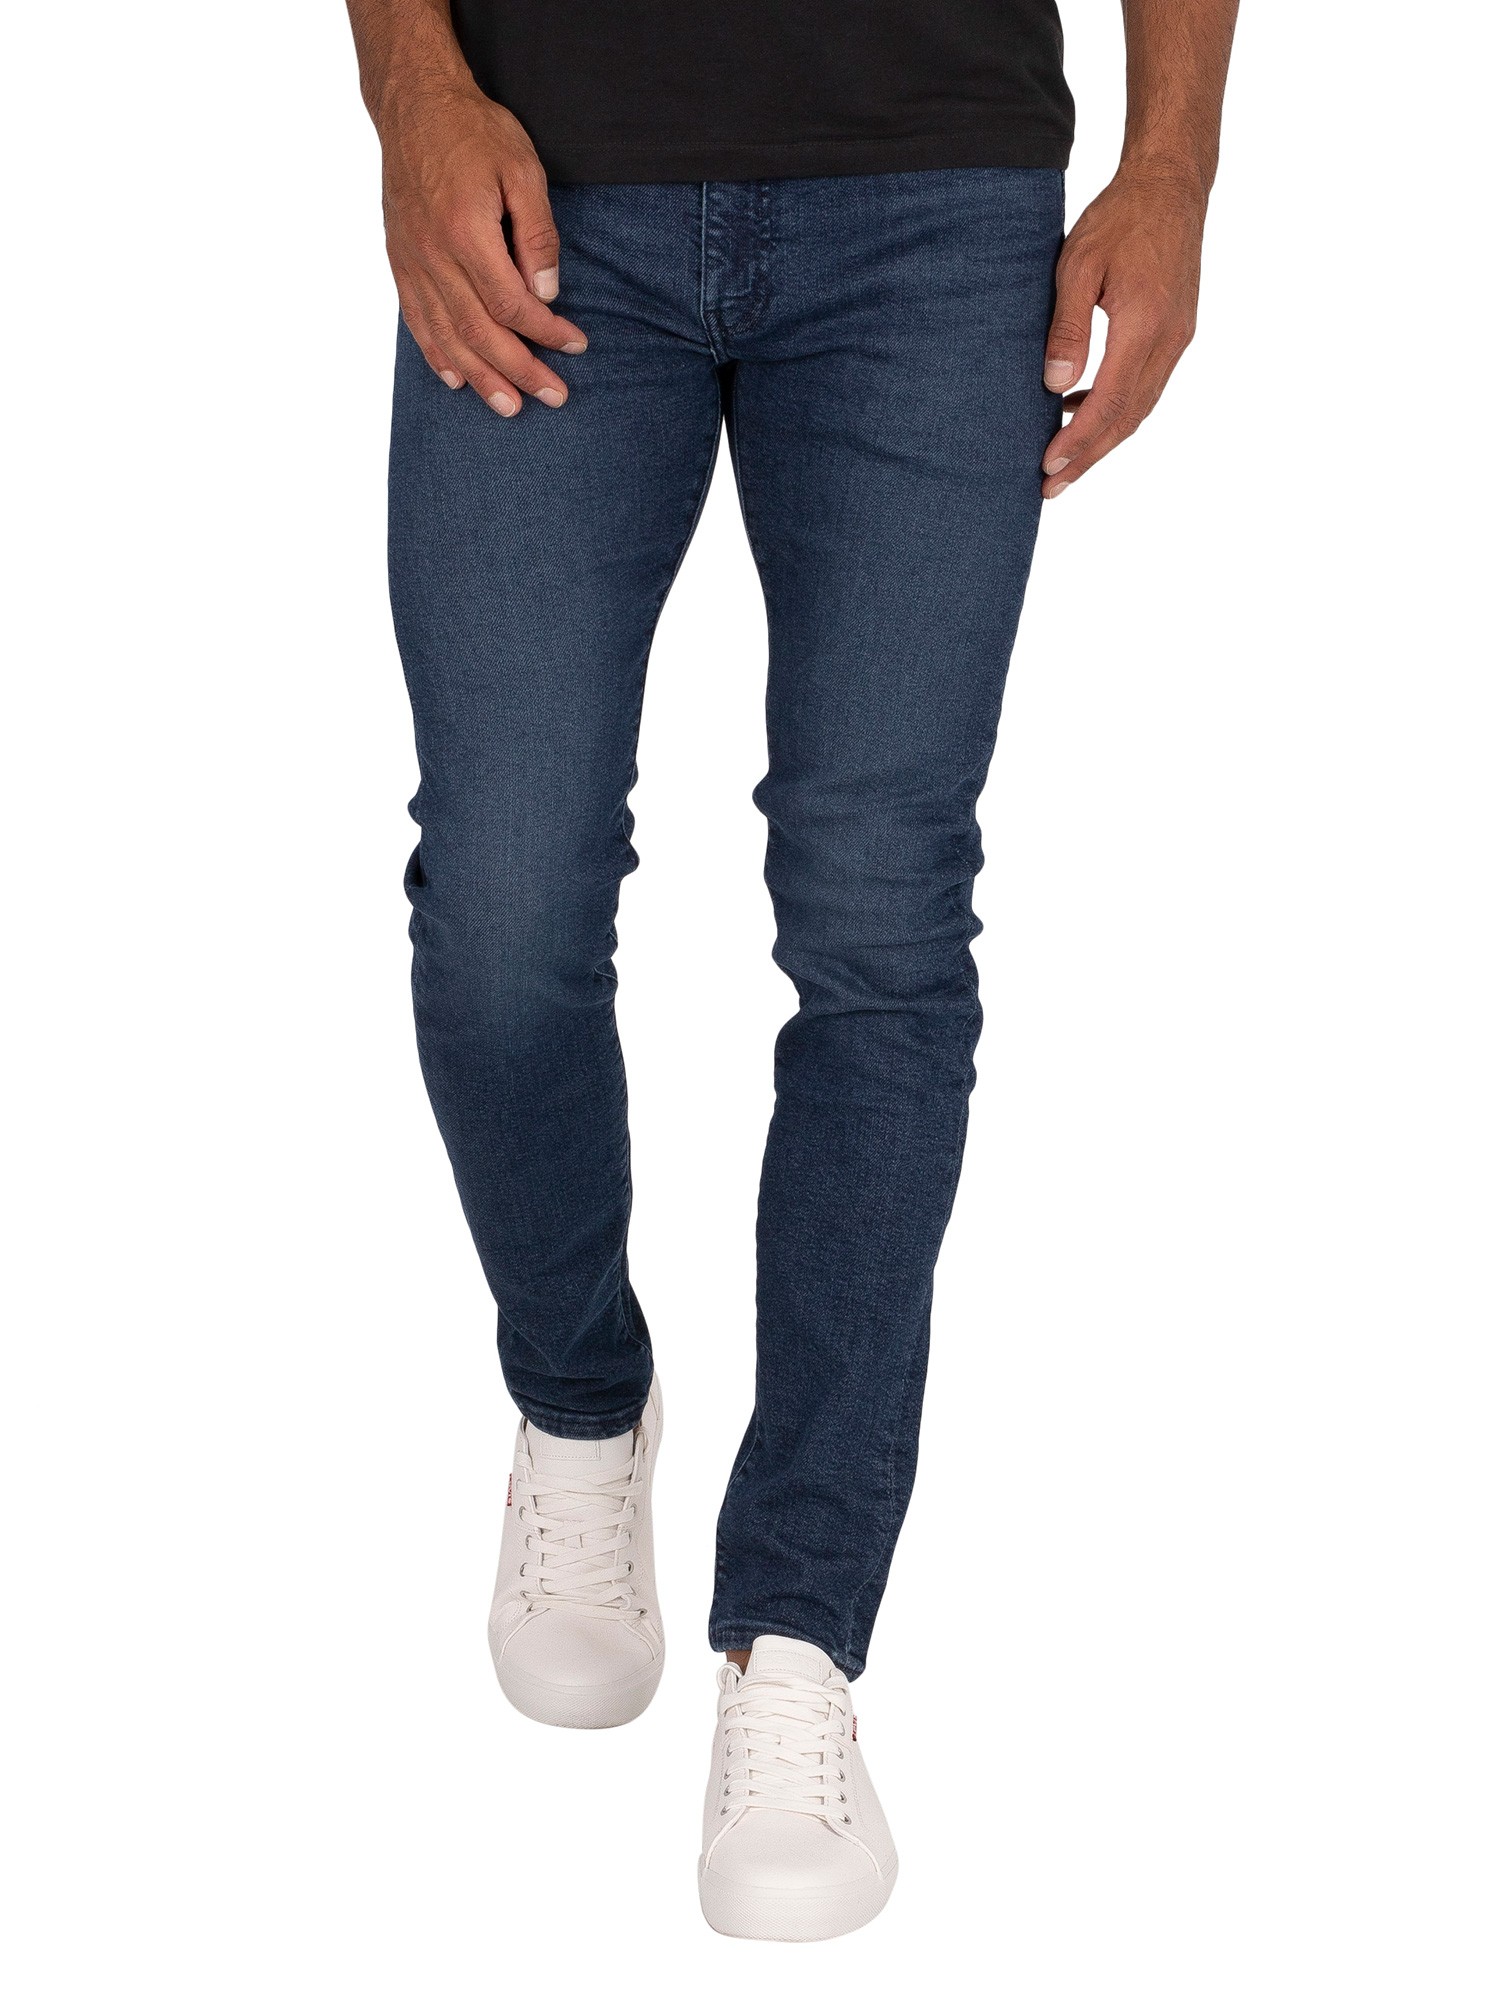 519 Extreme Skinny Jeans - Sage Overt 